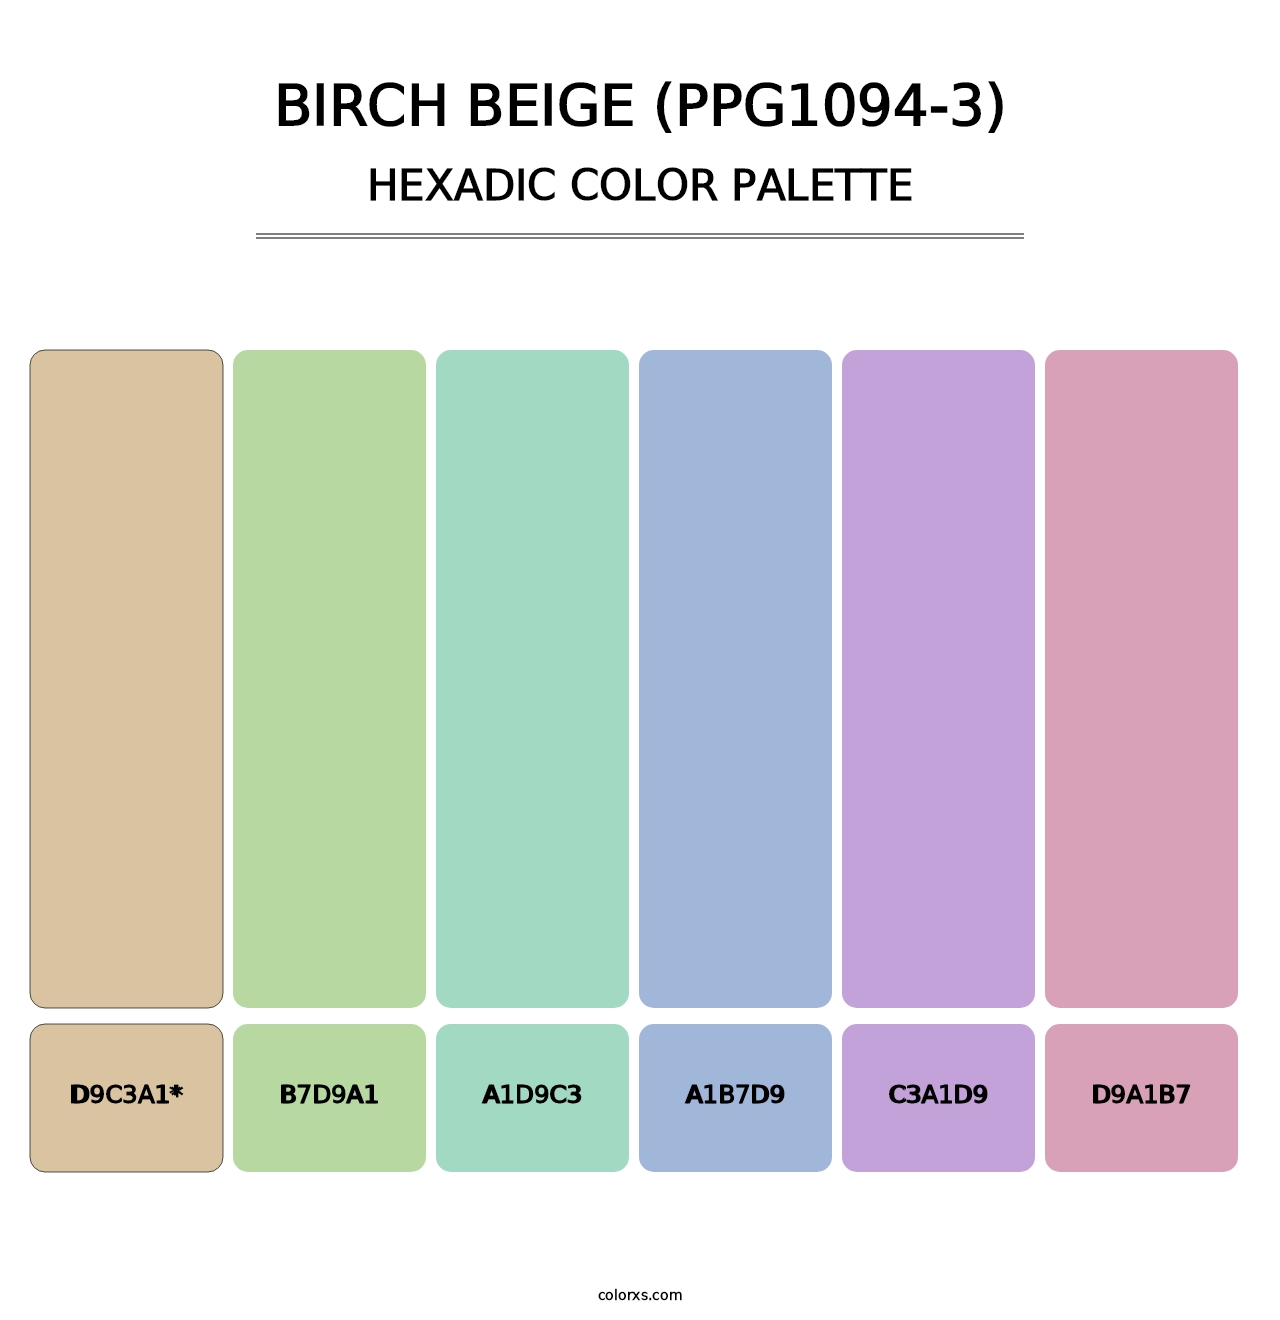 Birch Beige (PPG1094-3) - Hexadic Color Palette